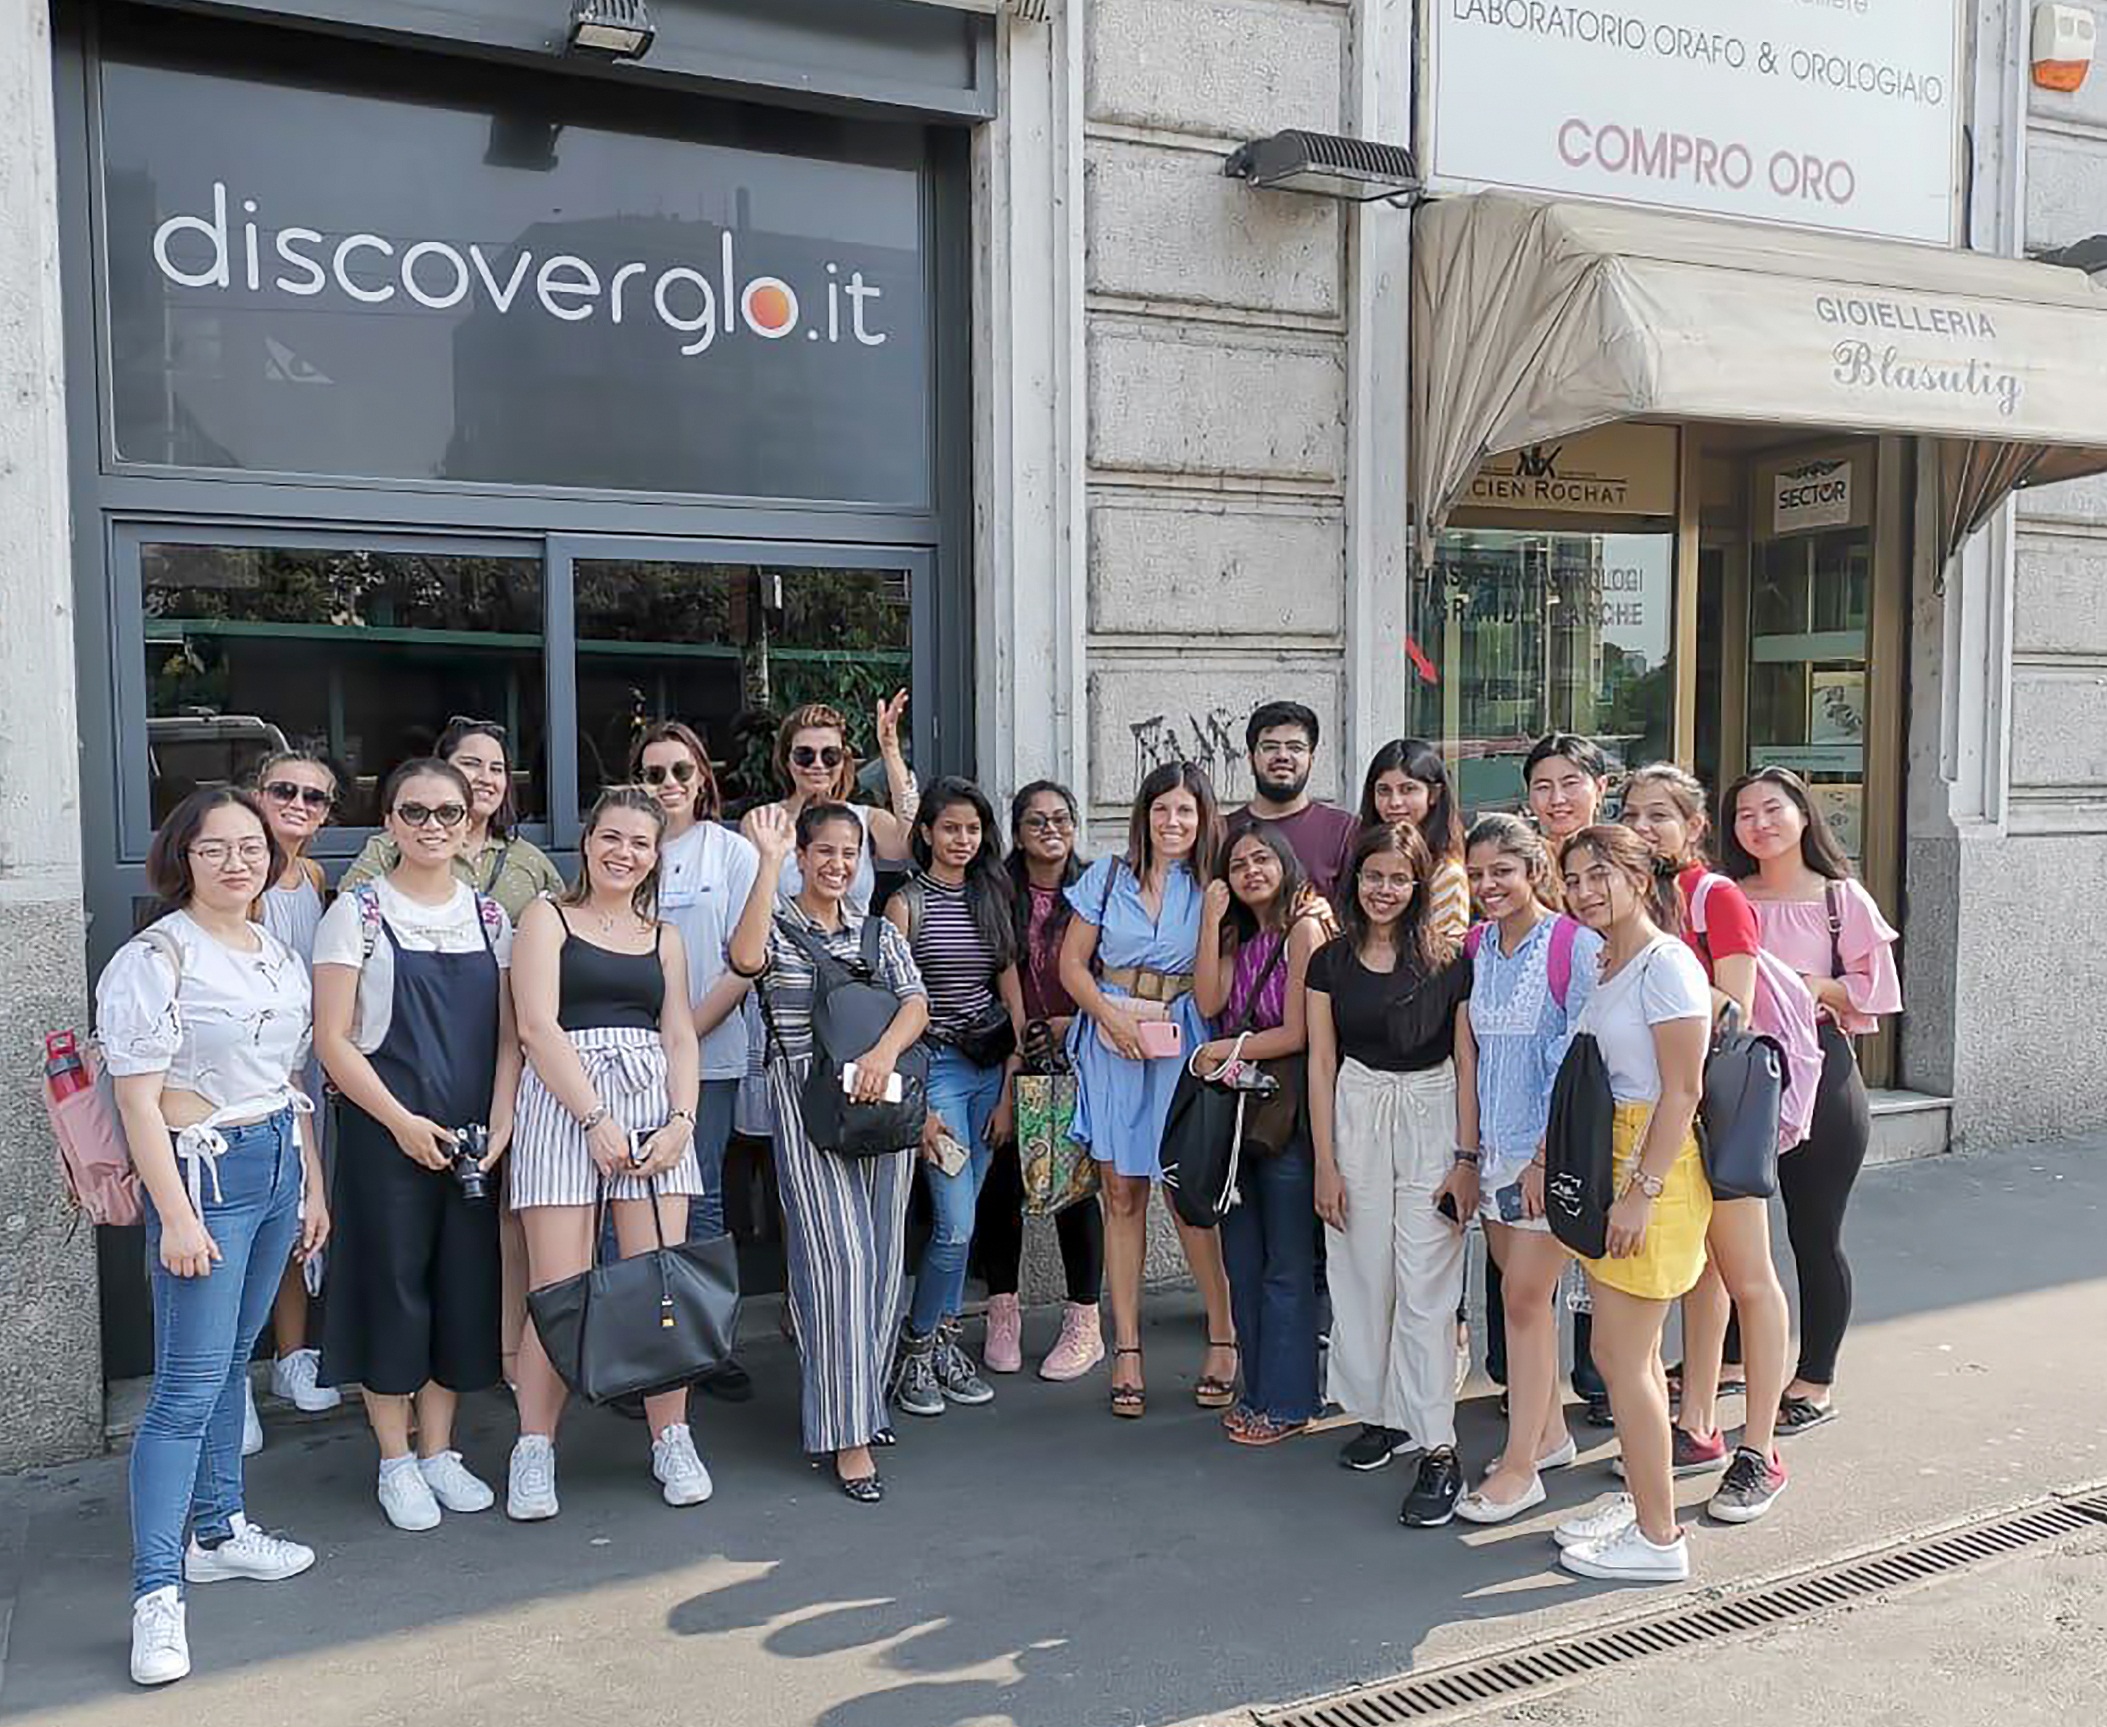 LPU fashion students in Italy for internship